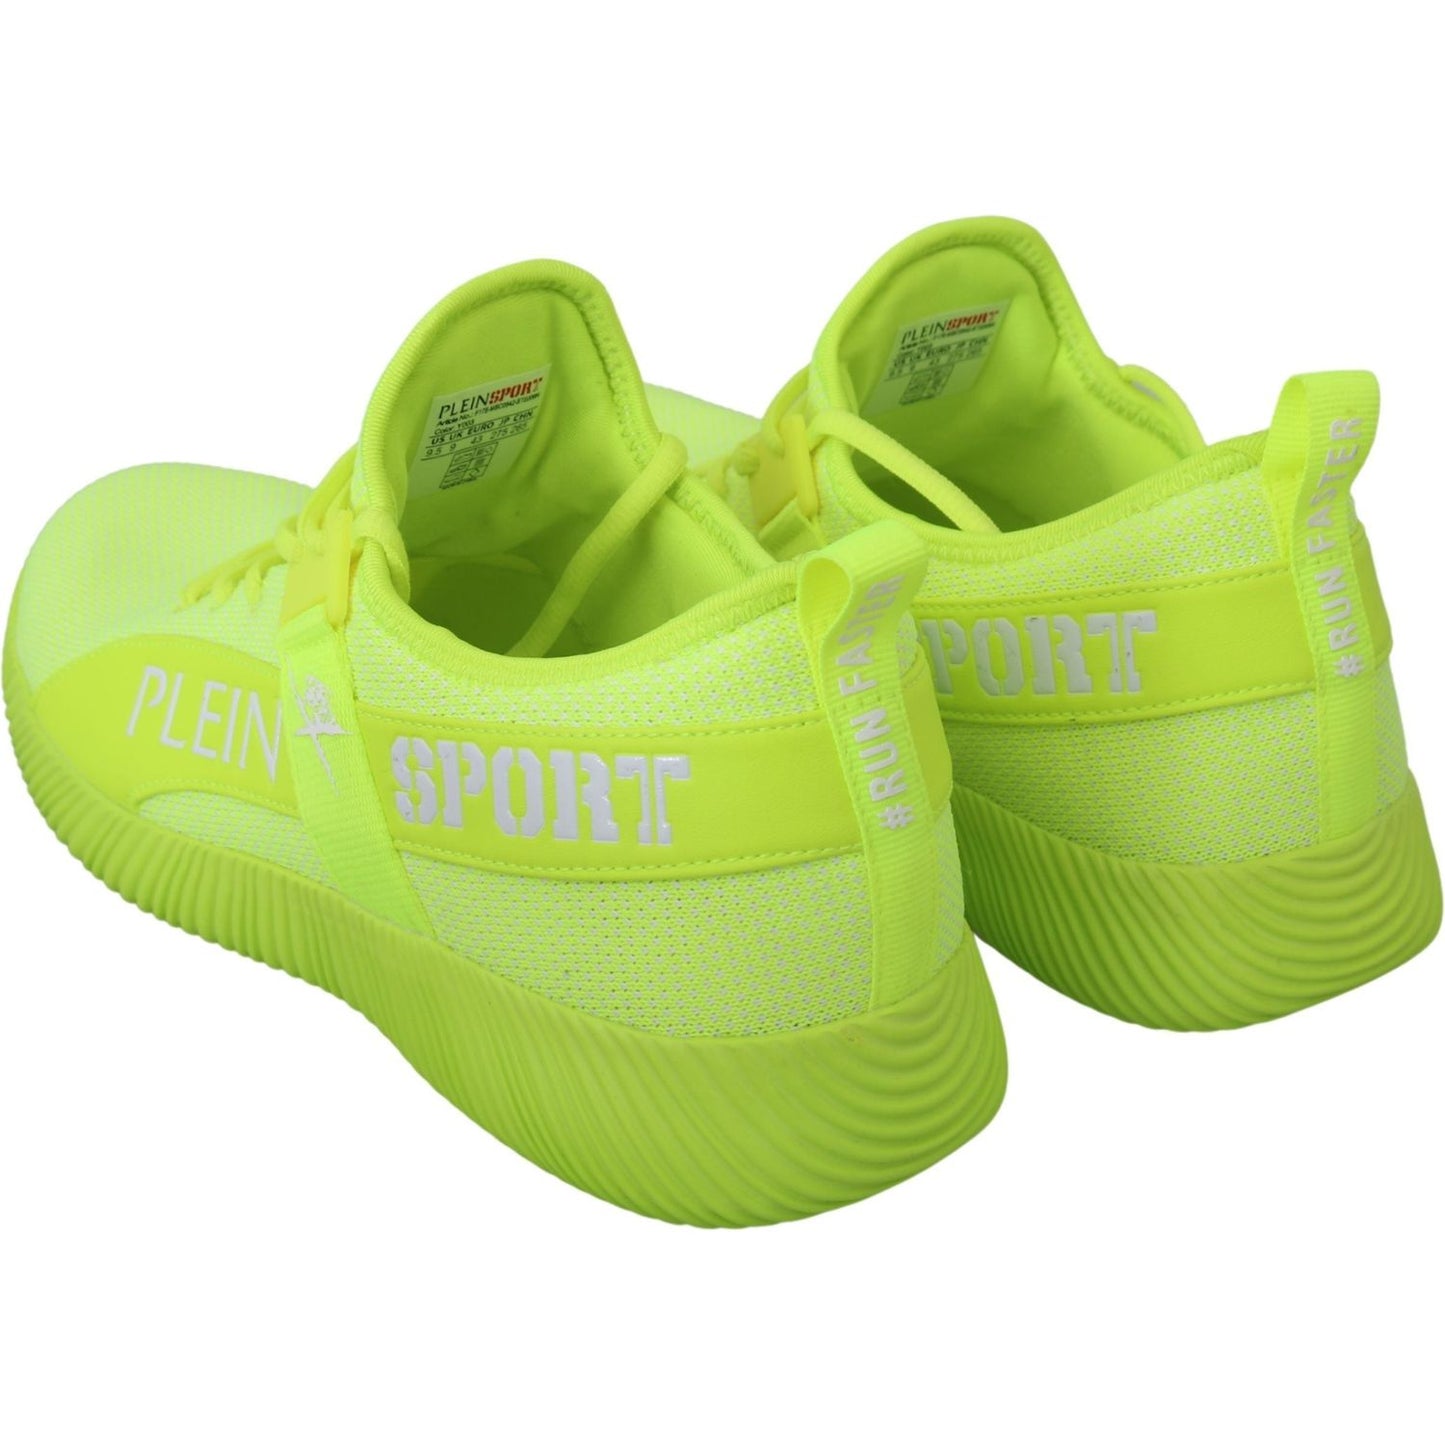 Philipp Plein Stylish Light Green Casual Sneakers green-carter-logo-hi-top-sneakers-shoes MAN SNEAKERS IMG_7557-scaled-0ab0de94-8e5.jpg